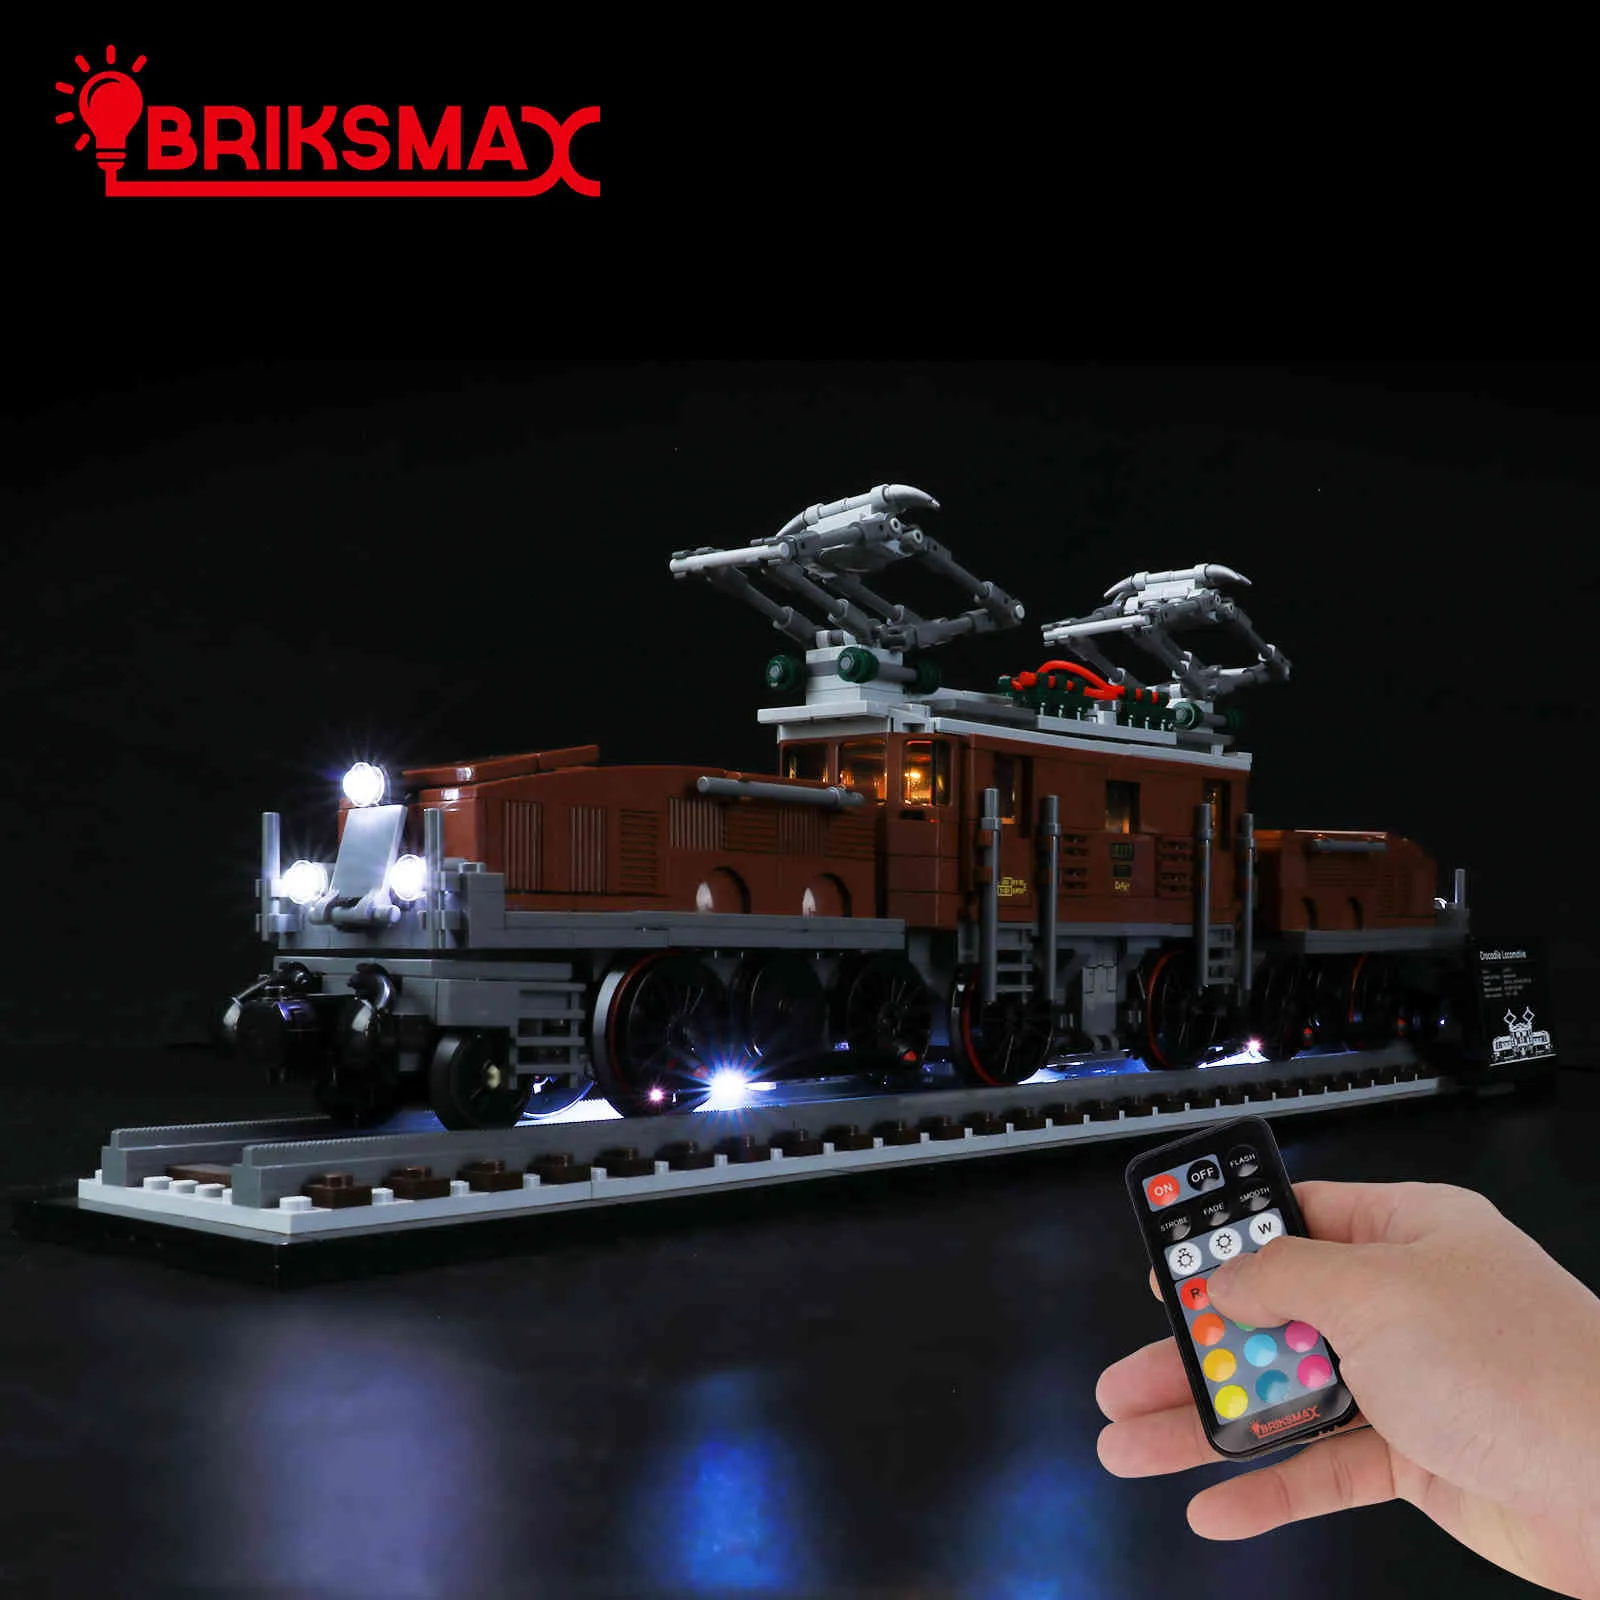 Briksmax LED ضوء كيت ل 10277 الخالق التمساح القاطرة، التحكم عن بعد آثار rbg x0503